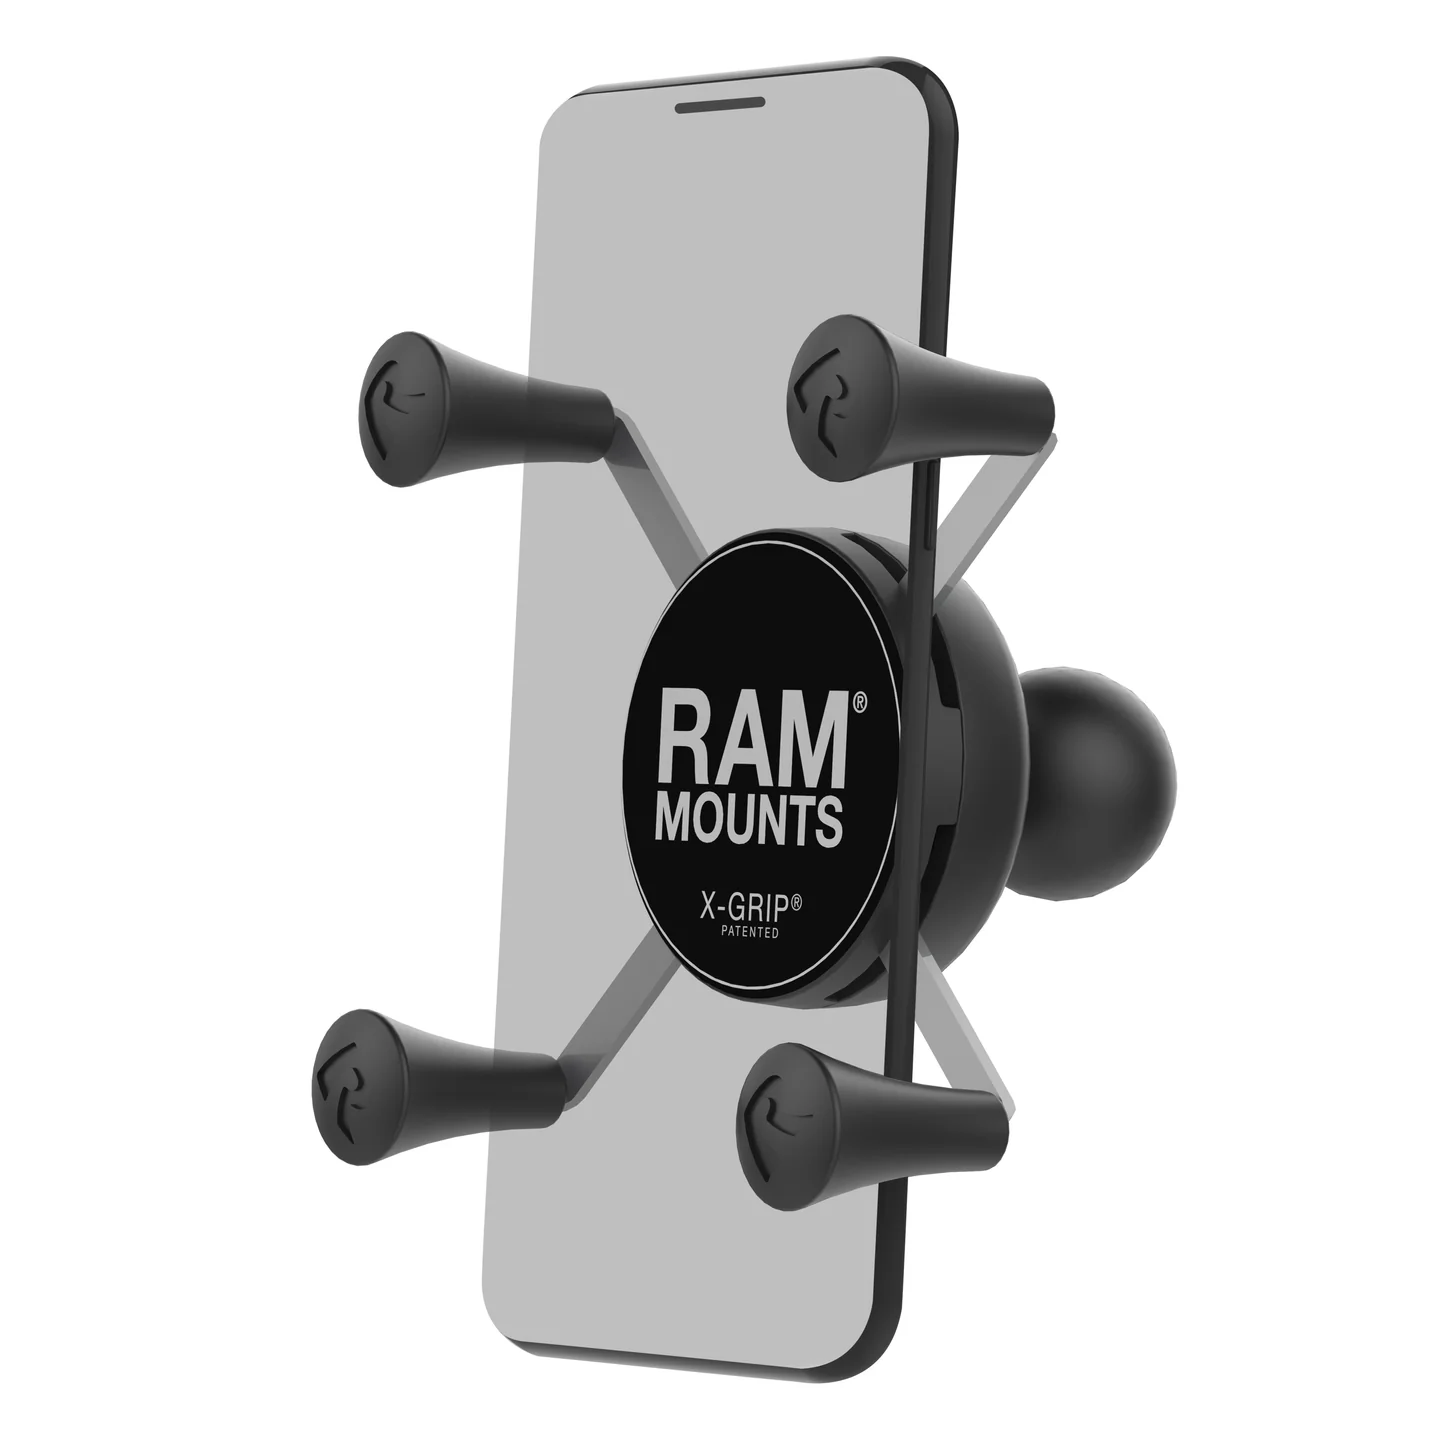 RAP-UN-CAP-4U Ram Mounts X-Grip® Replacement Post Caps - Set of Four